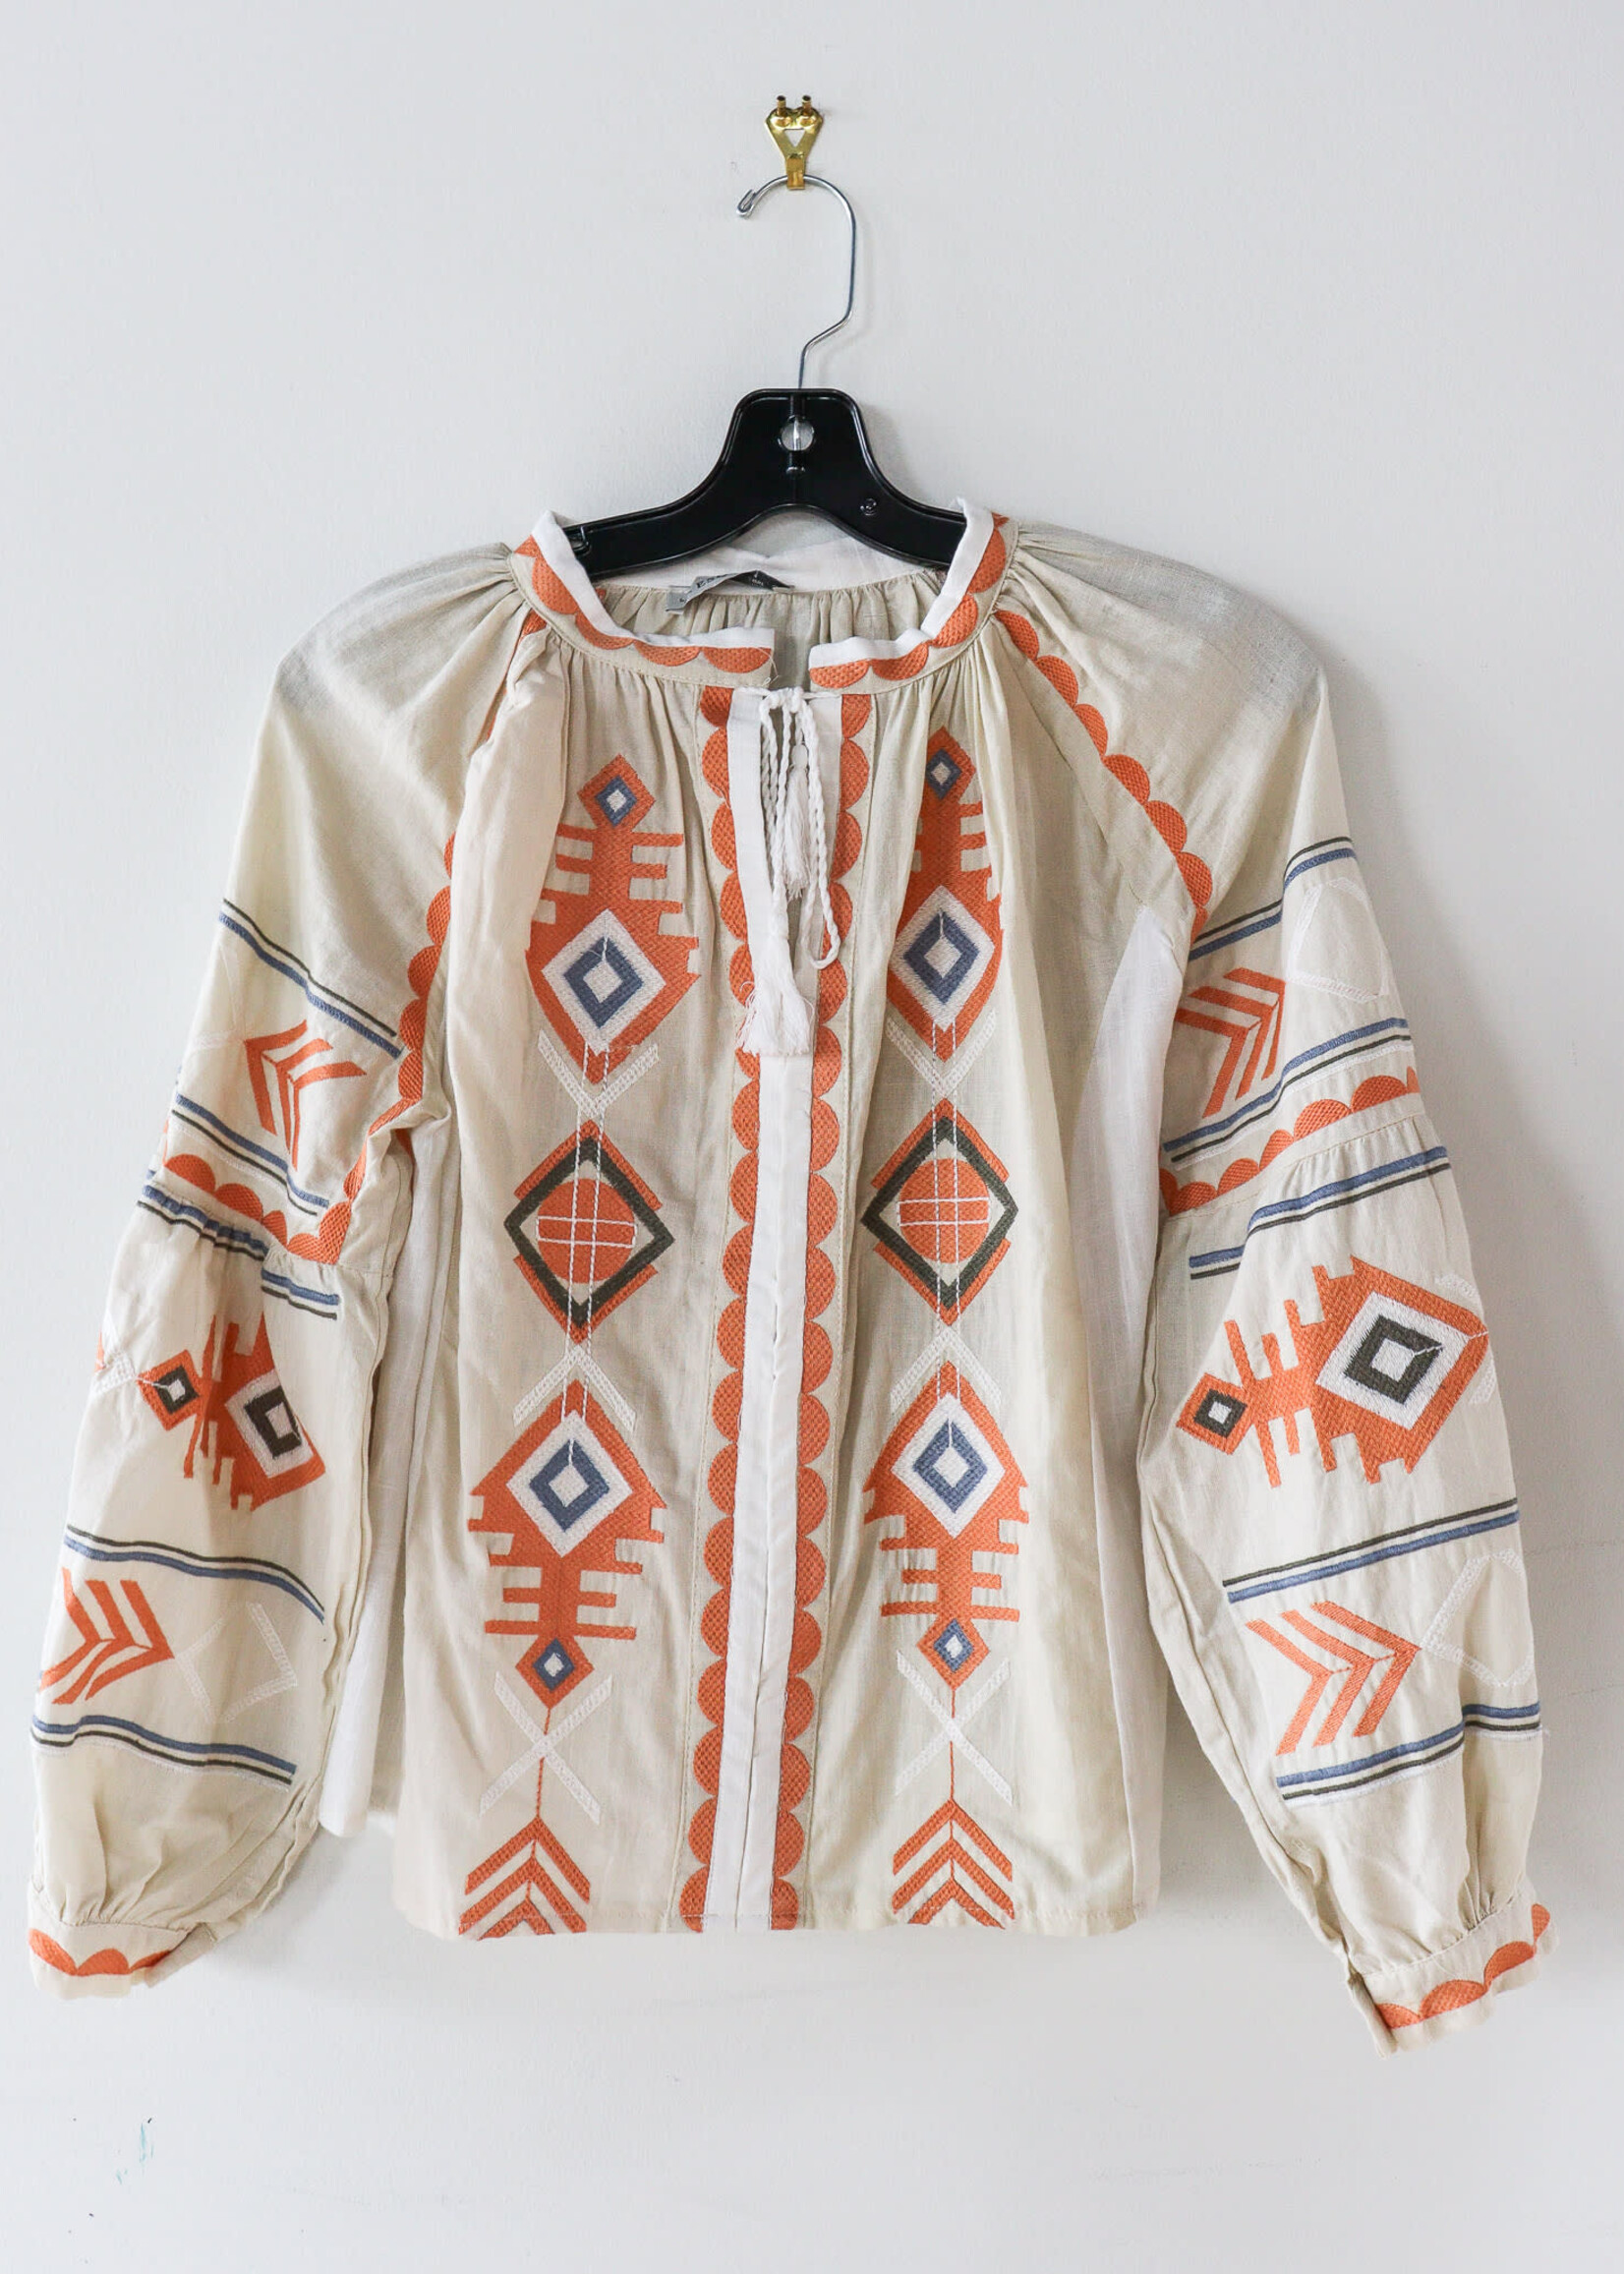 APPAREL - (W) Blouse, Large, 2024, Cream / Orange, Olive, White Embroidery by Dressa, Ukraine